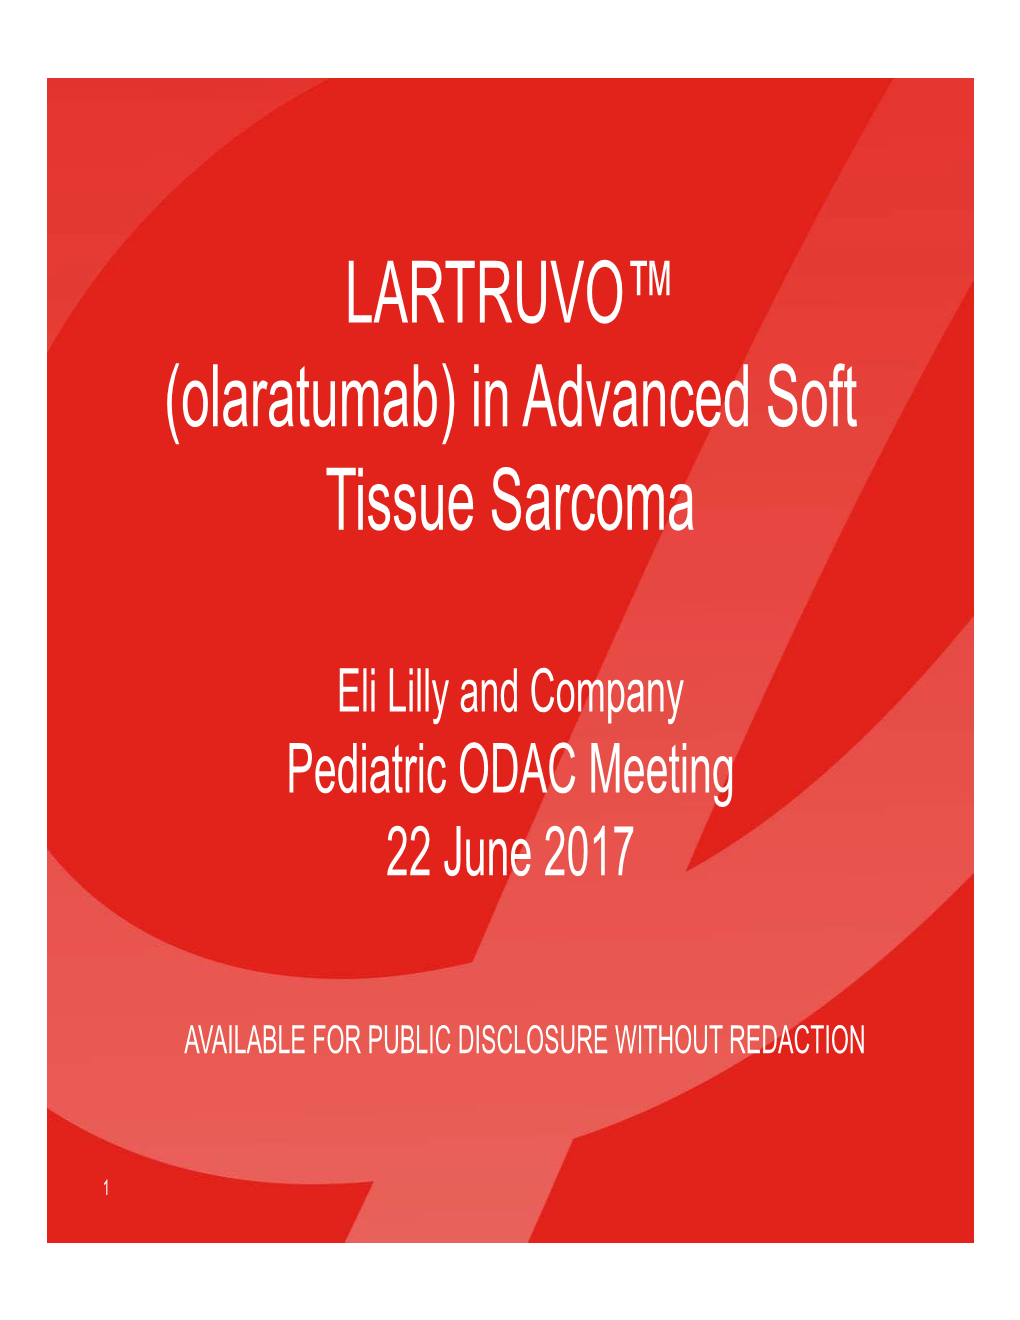 LARTRUVO™ (Olaratumab) in Advanced Soft Tissue Sarcoma